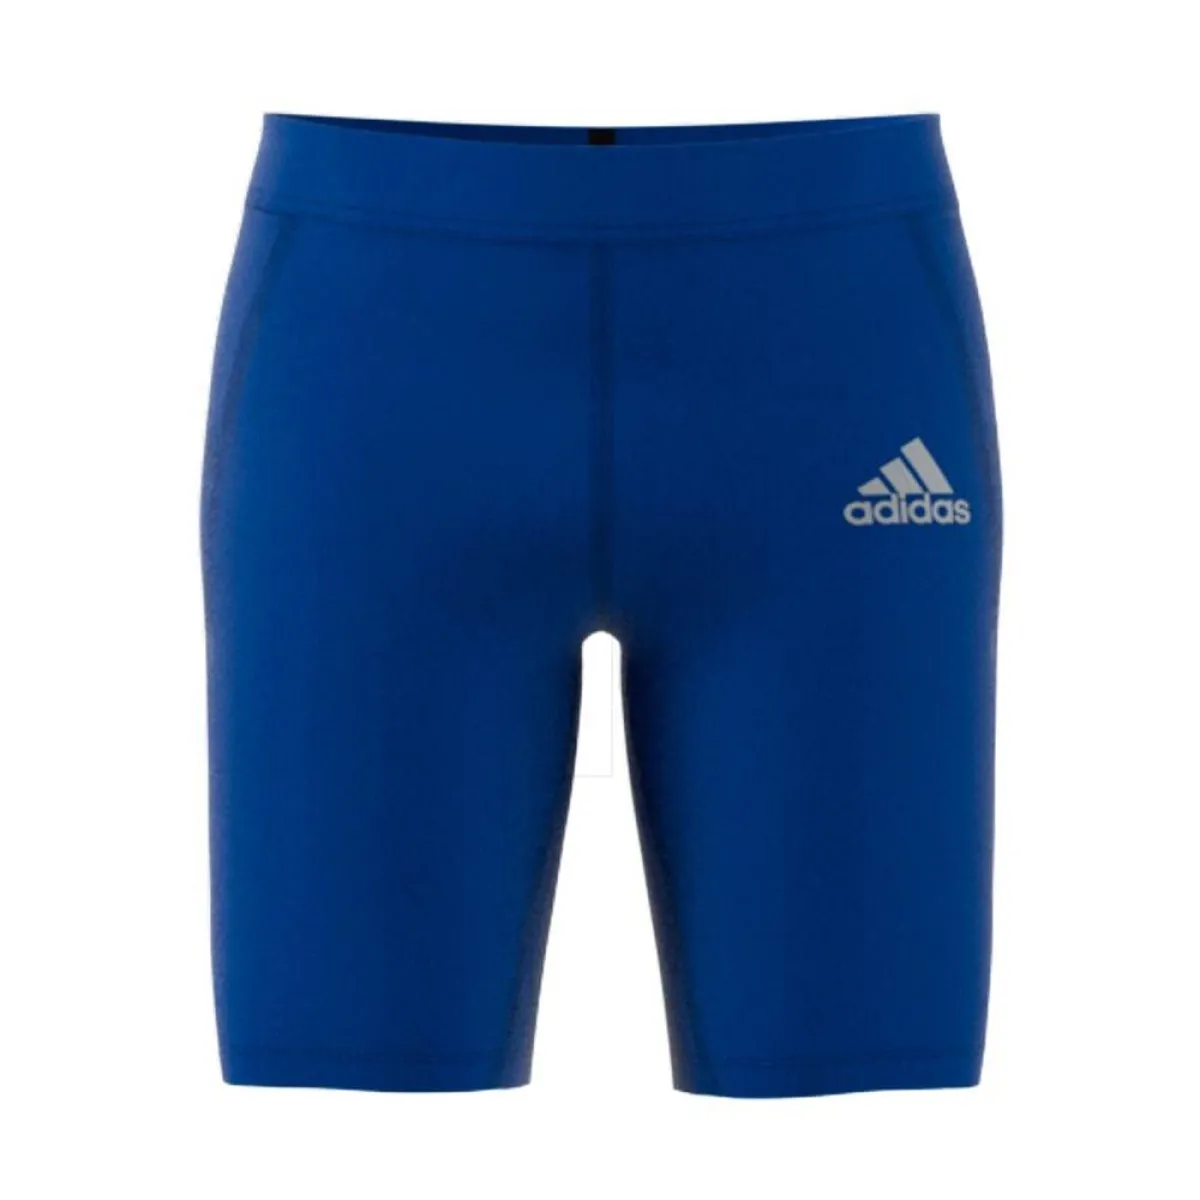 adidas functional shortsTechfit Tight royal blue